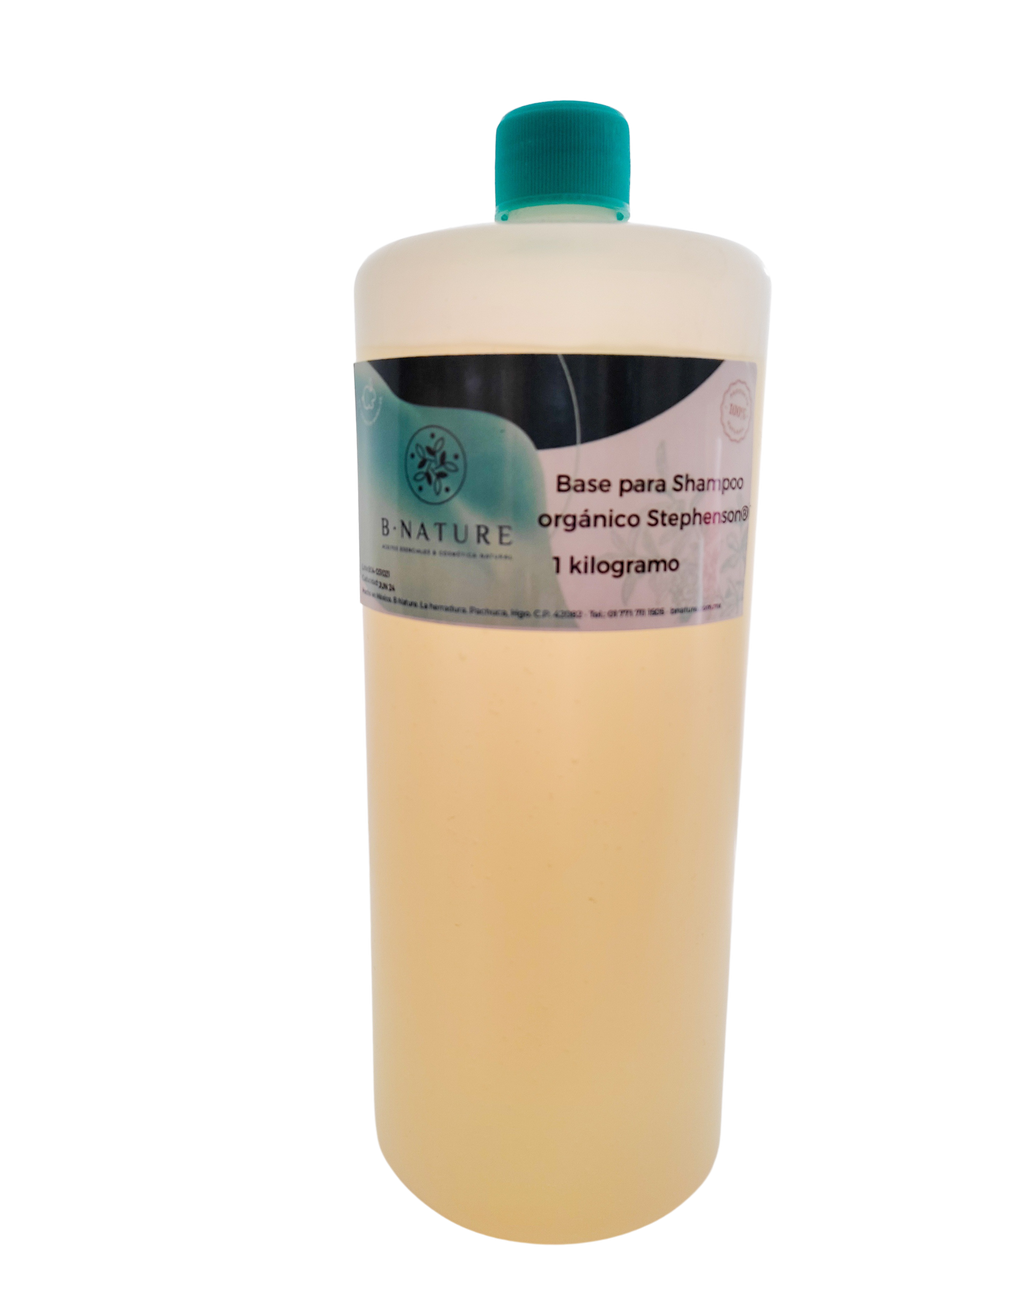 Base para shampoo orgánico Stephenson® 1 kilogramo